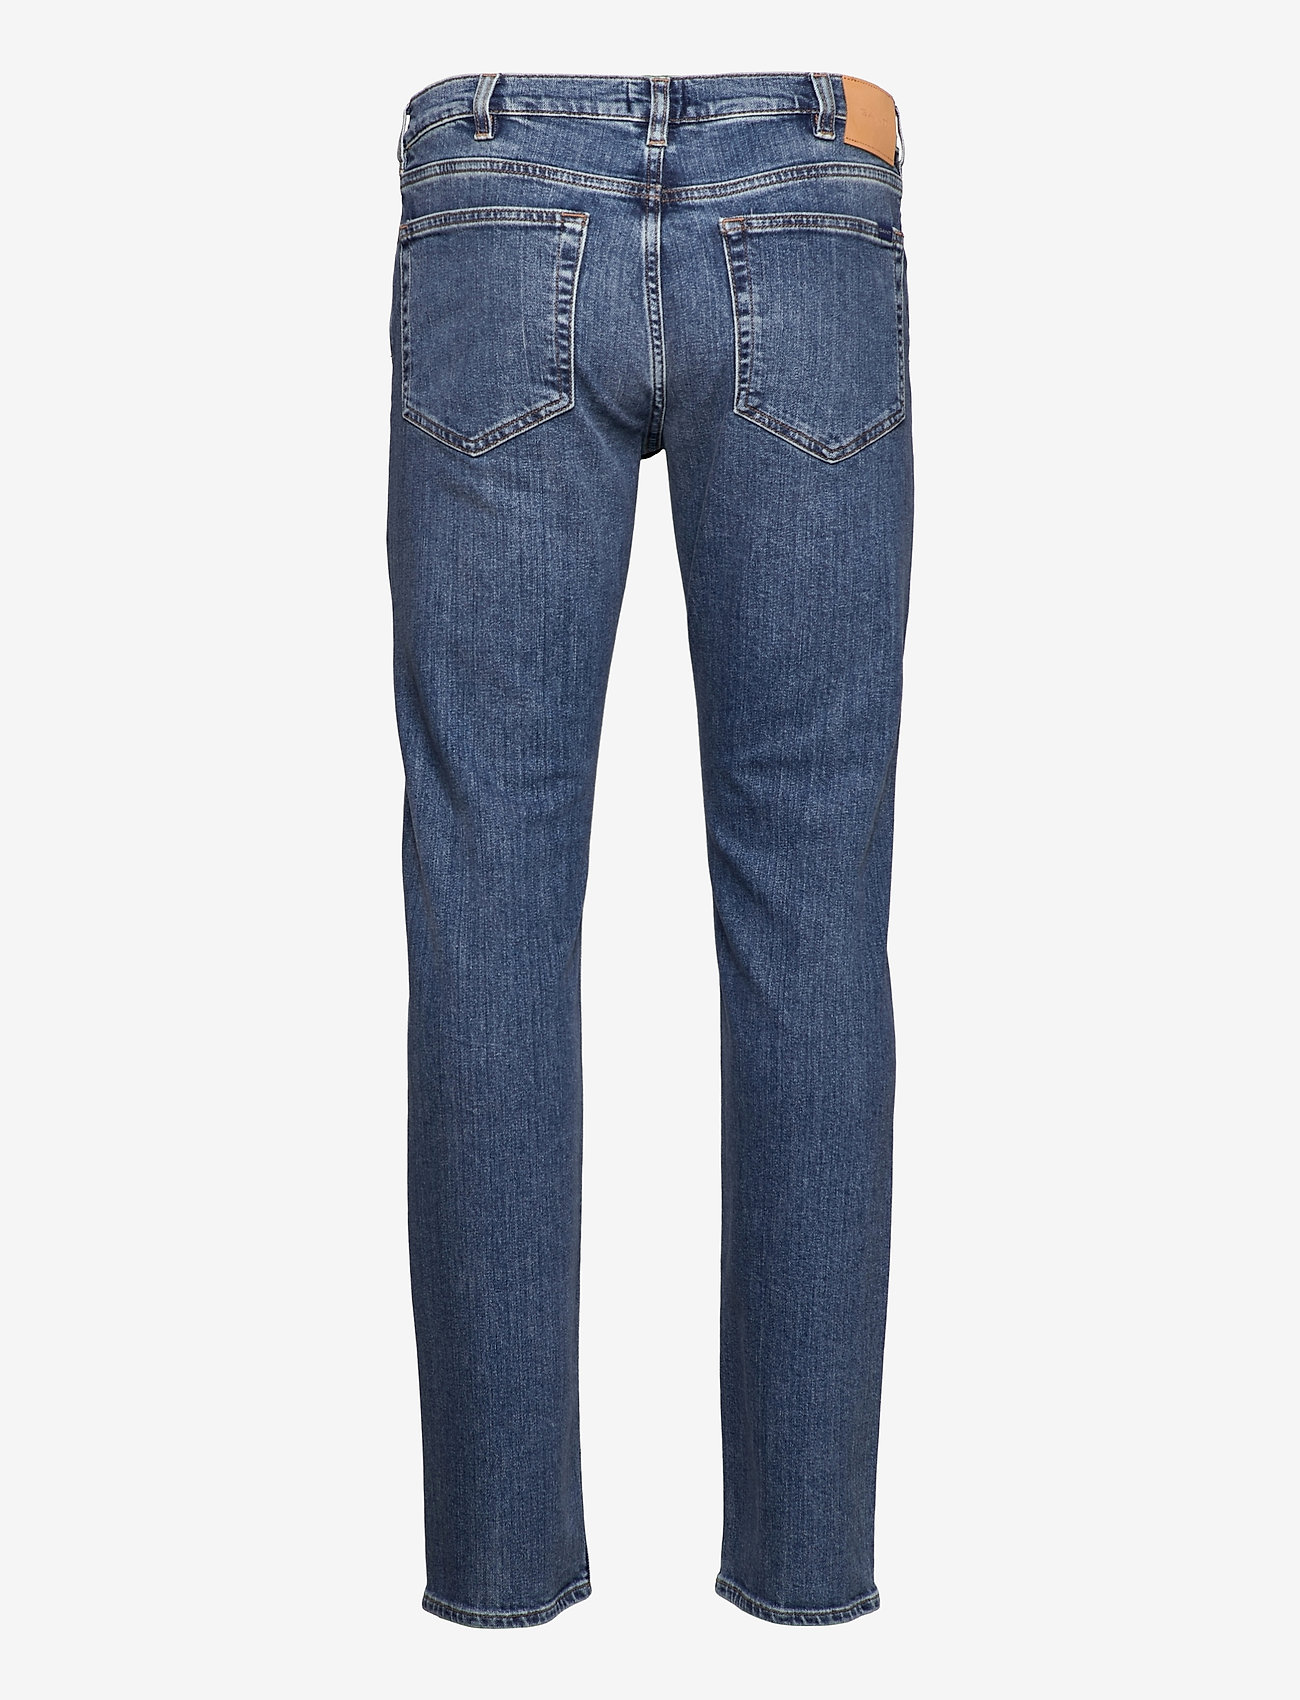 GANT - ARLEY GANT JEANS - regular jeans - mid blue worn in - 1